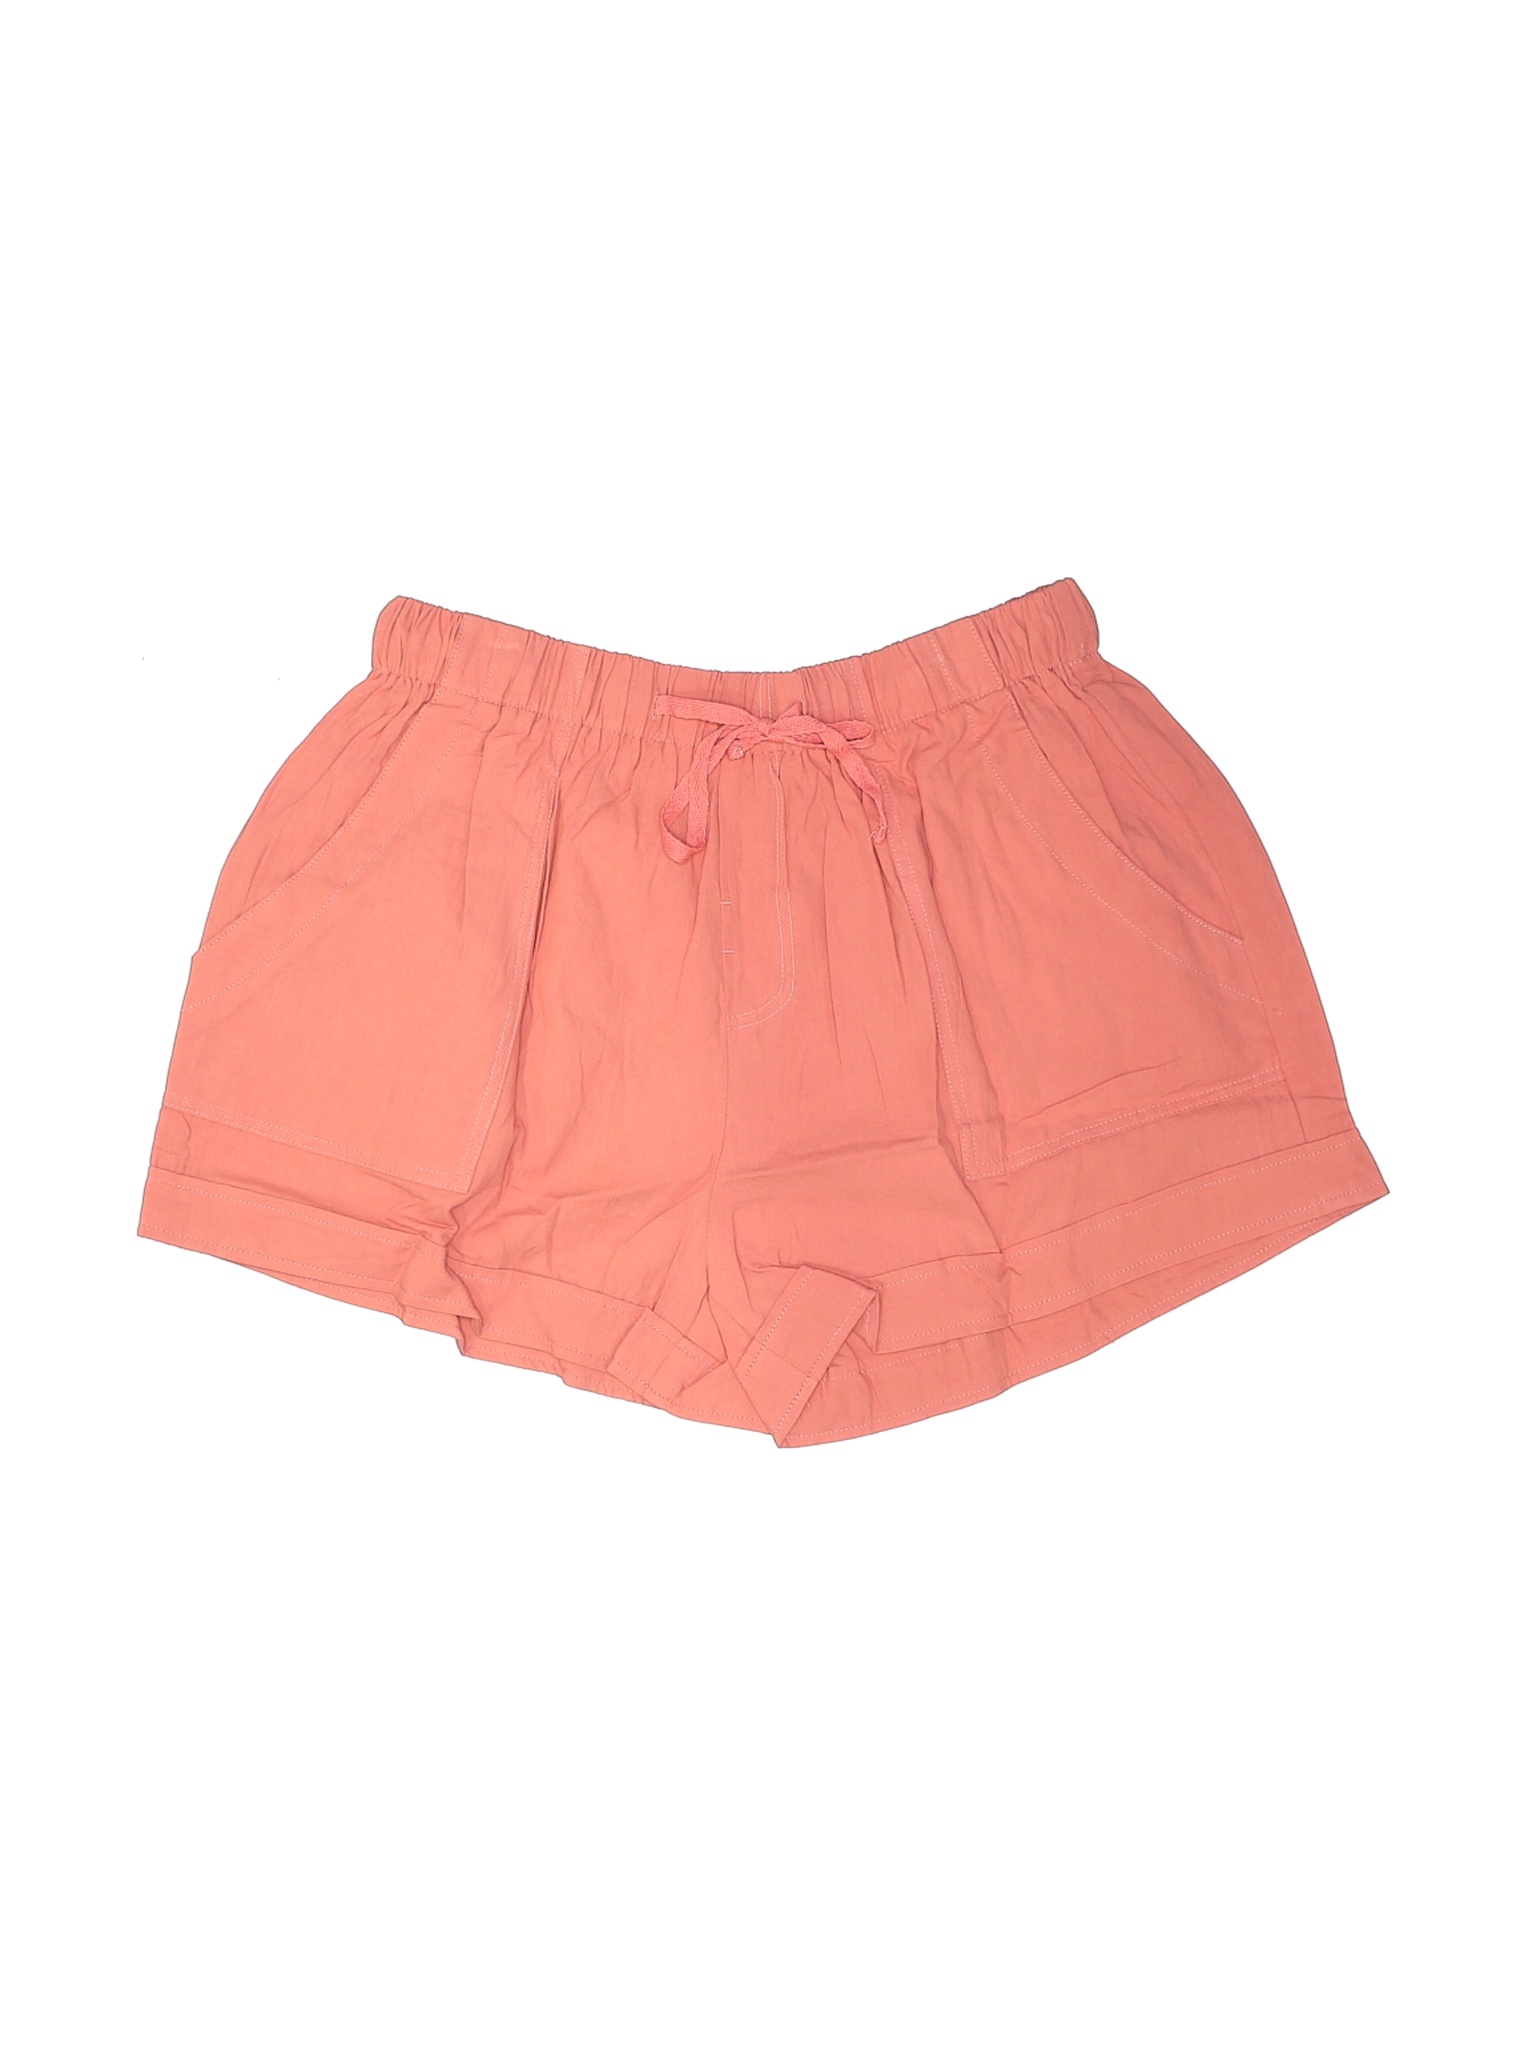 Unbranded Women Pink Shorts XL | eBay